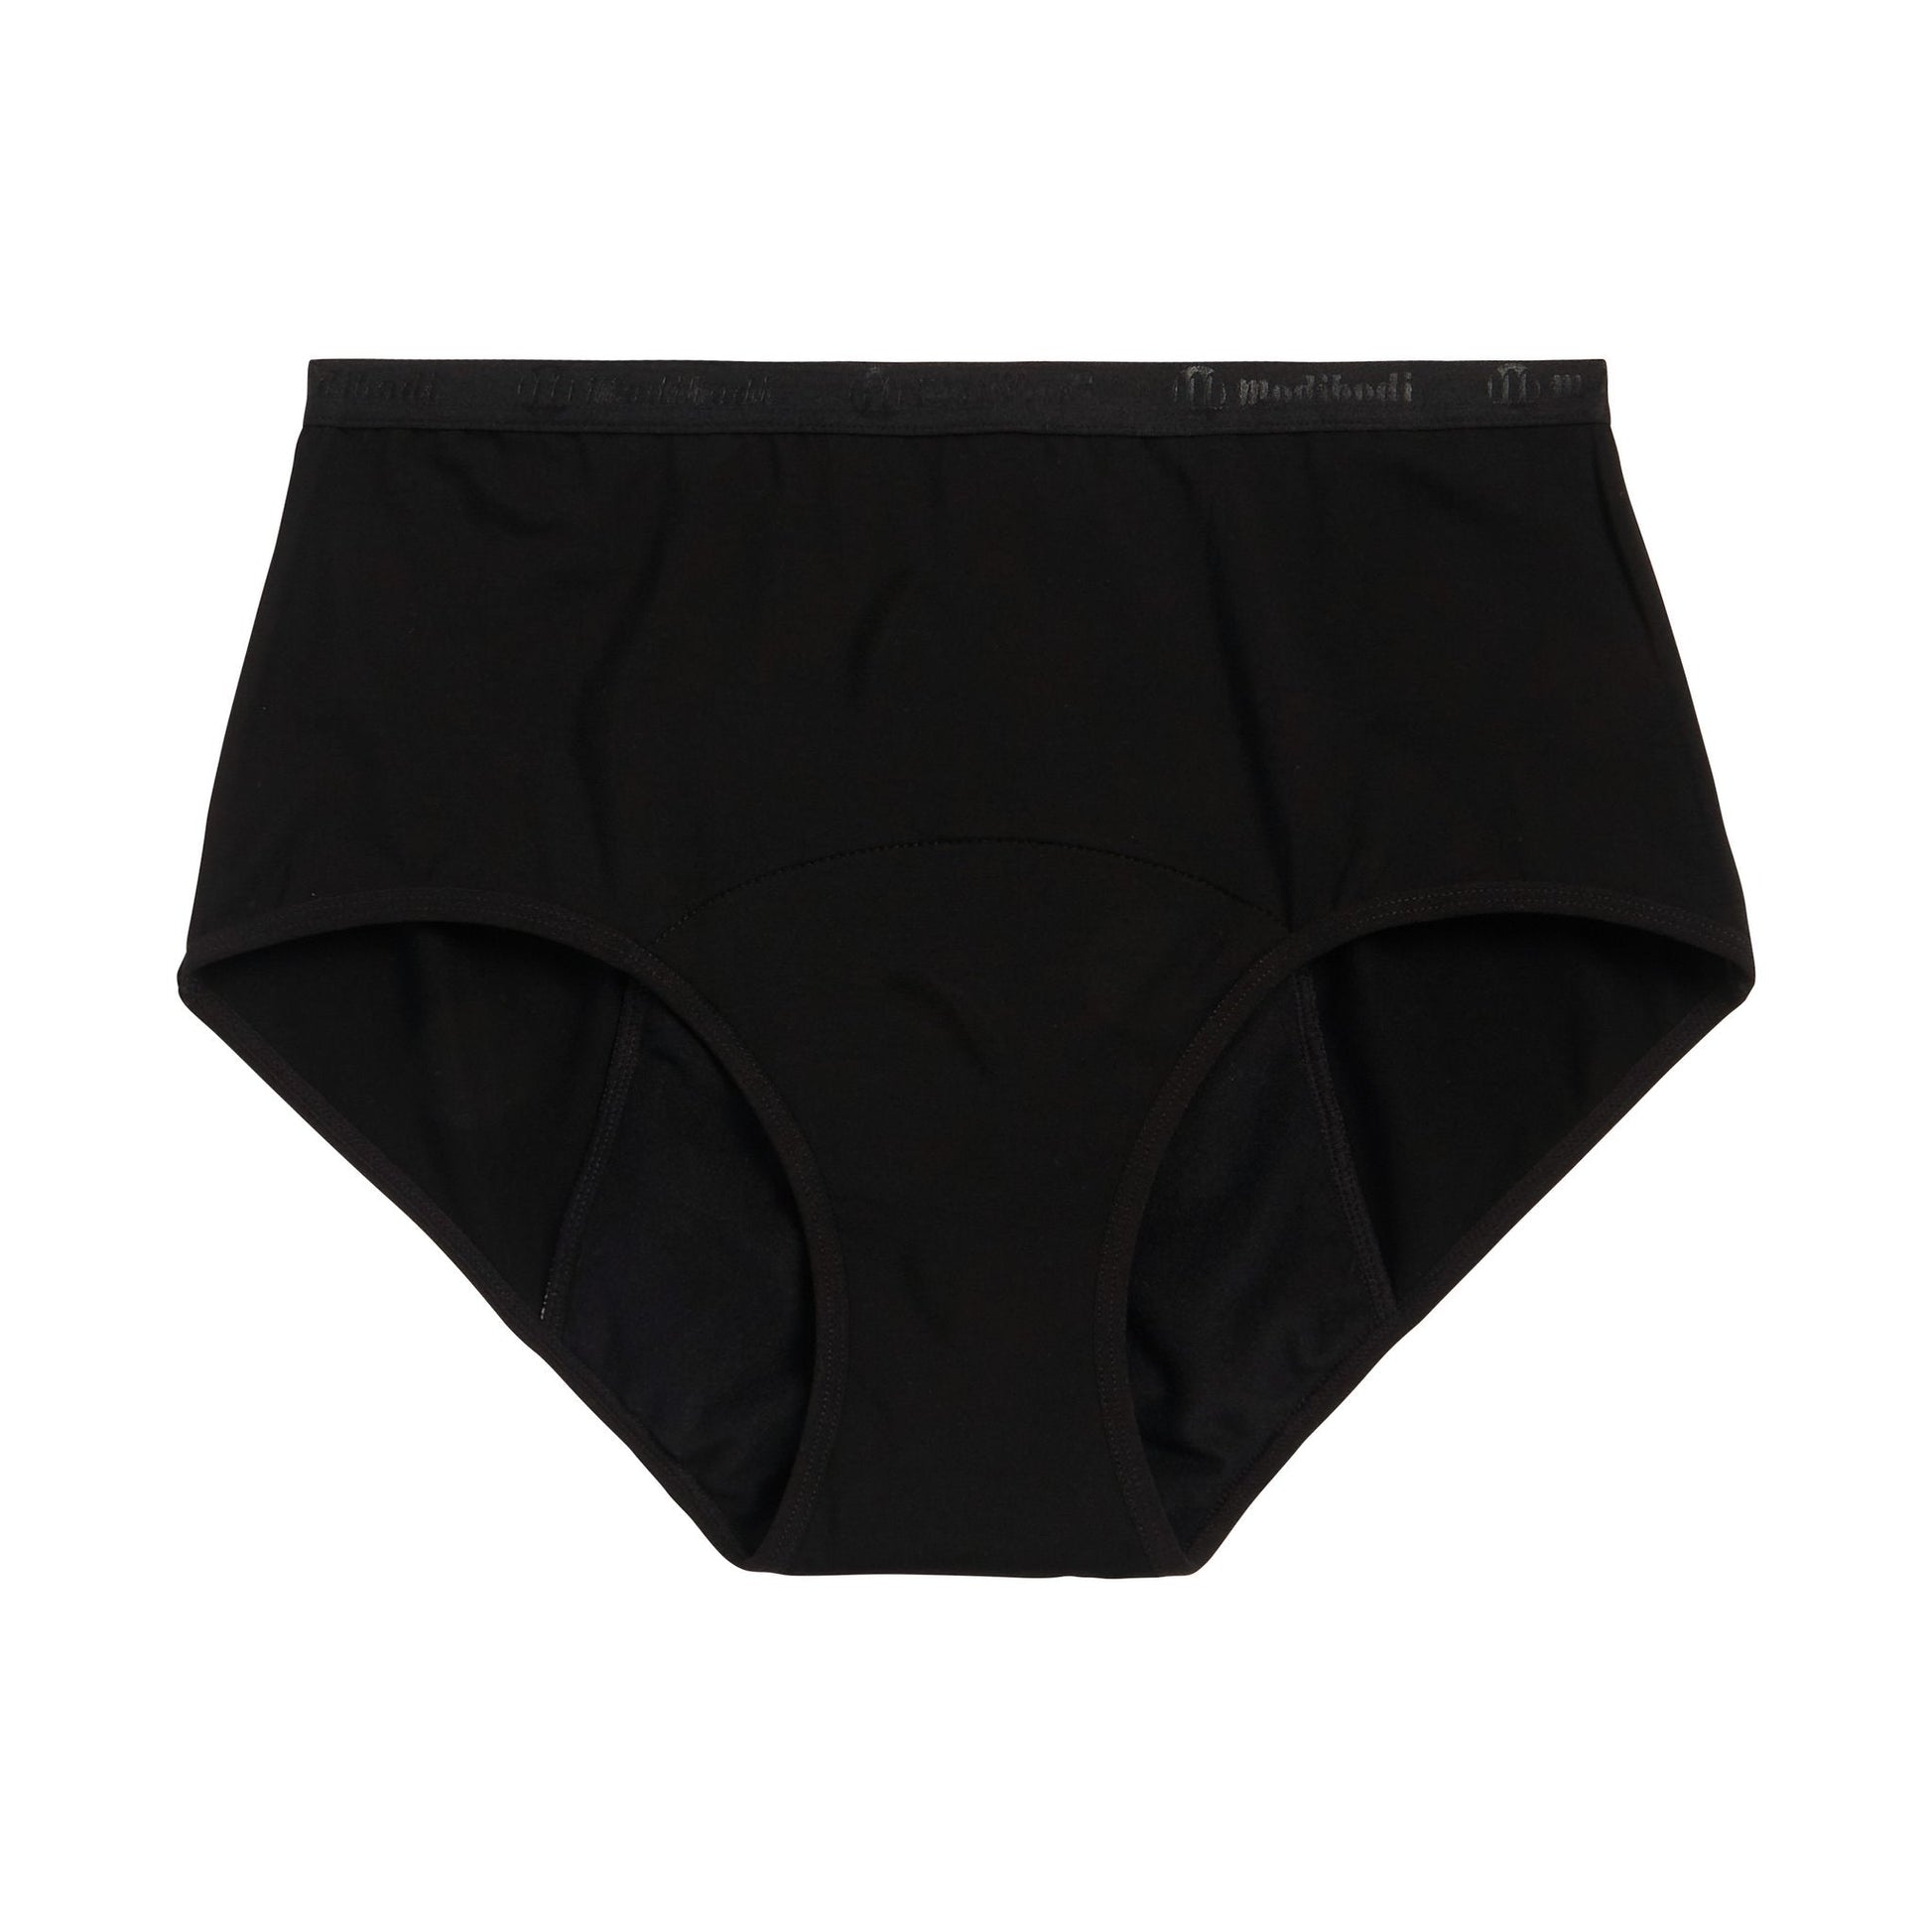 MODIBODI PERIOD PANTS Size 16 , Brand New Sealed Black £6.00 - PicClick UK